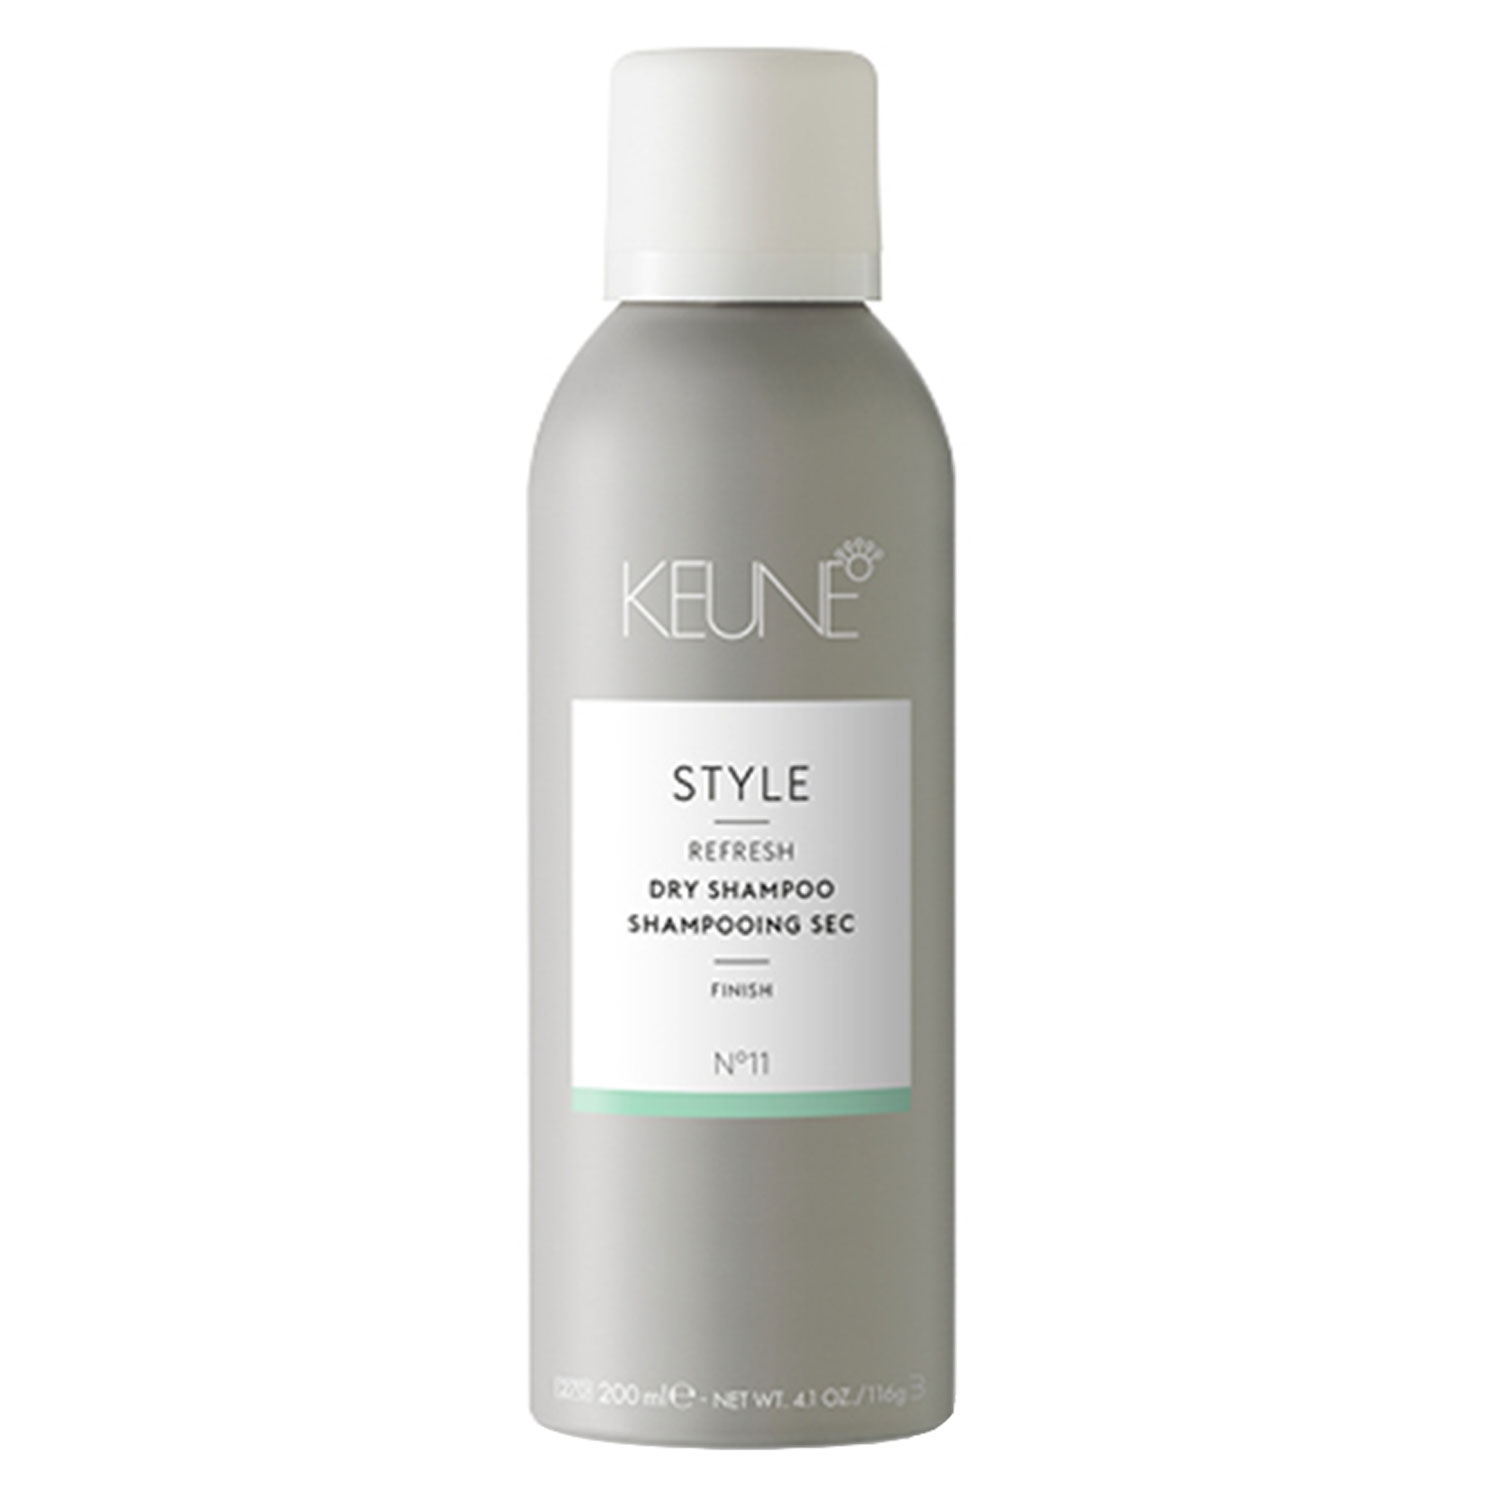 Produktbild von Keune Style - Dry Shampoo